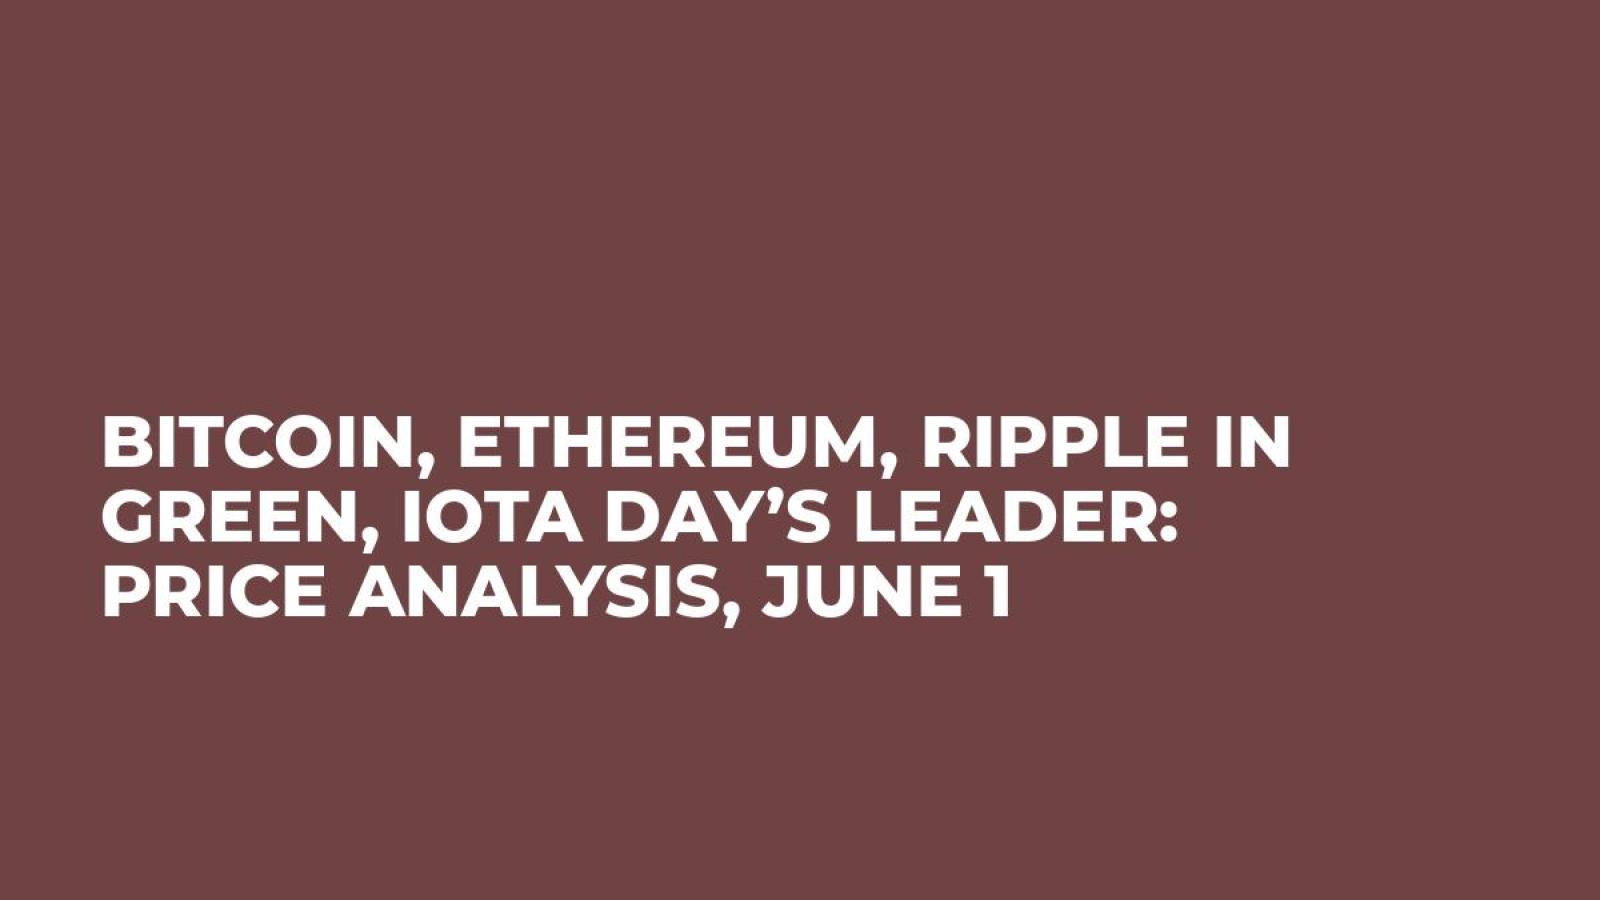 Bitcoin, Ethereum, Ripple in Green, IOTA Day’s Leader: Price Analysis, June 1